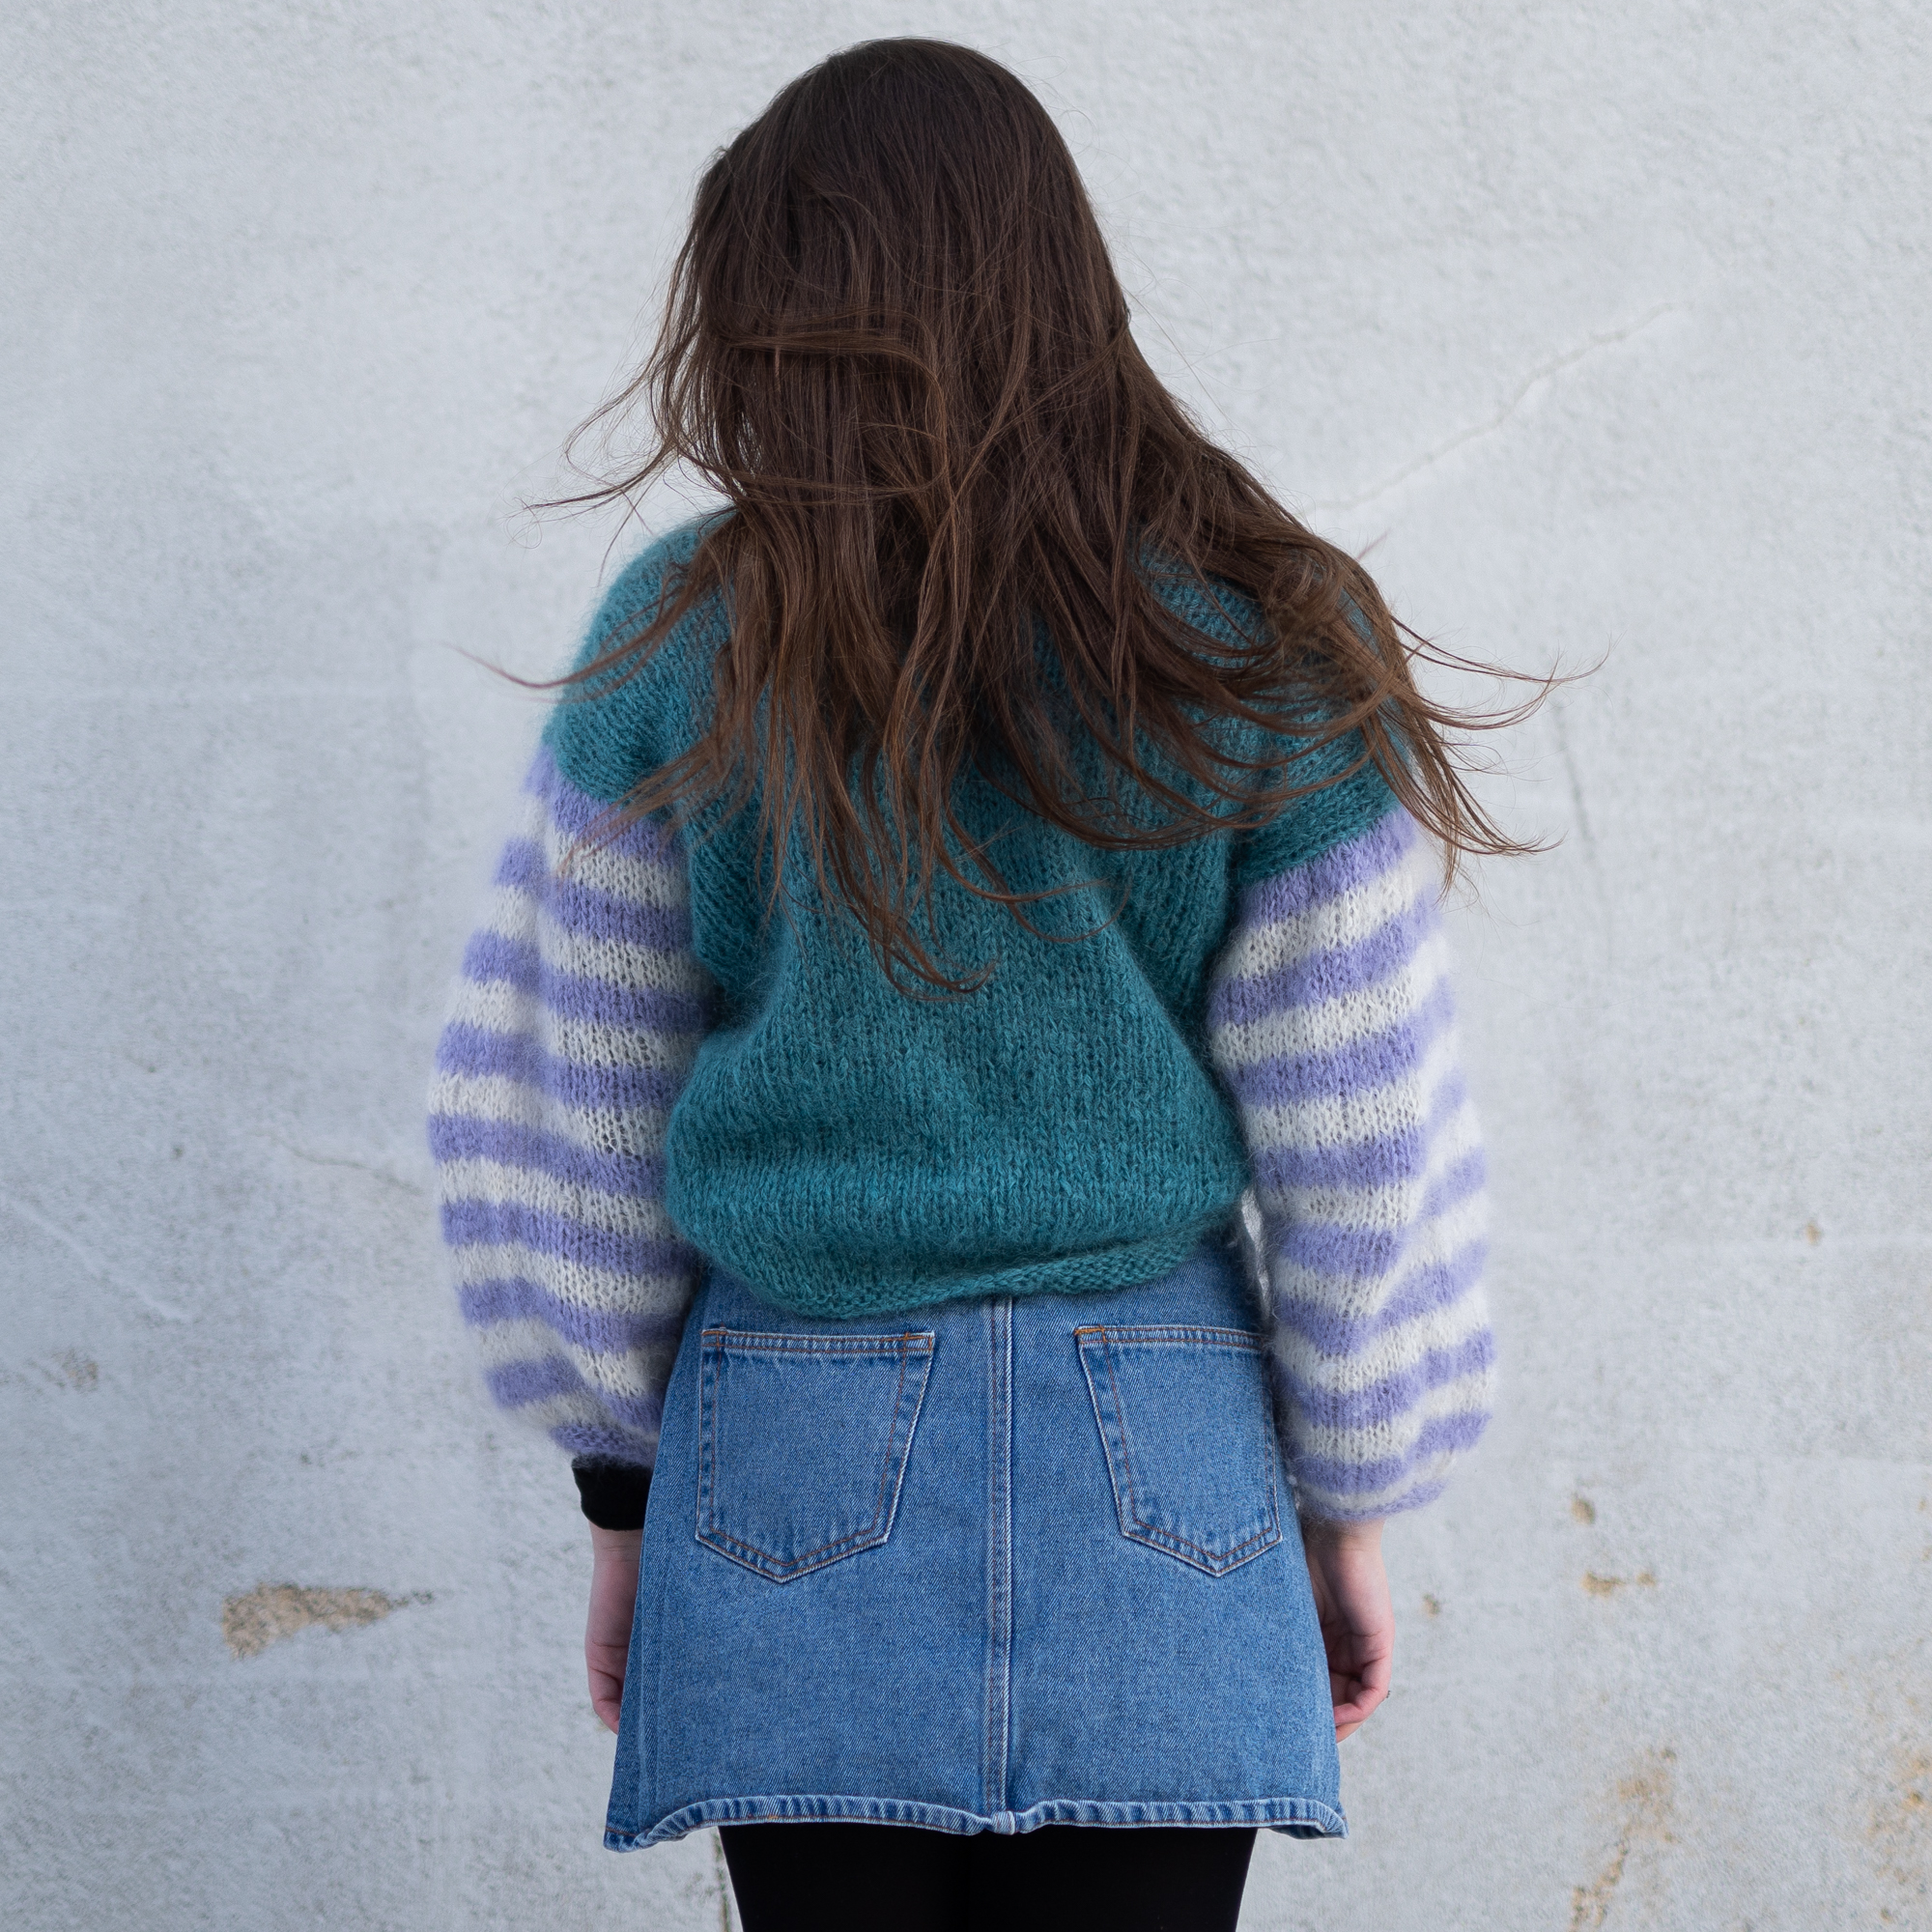  - Paradise jacket knitting pattern | Knitted jacket - by HipKnitShop - 20/04/2020